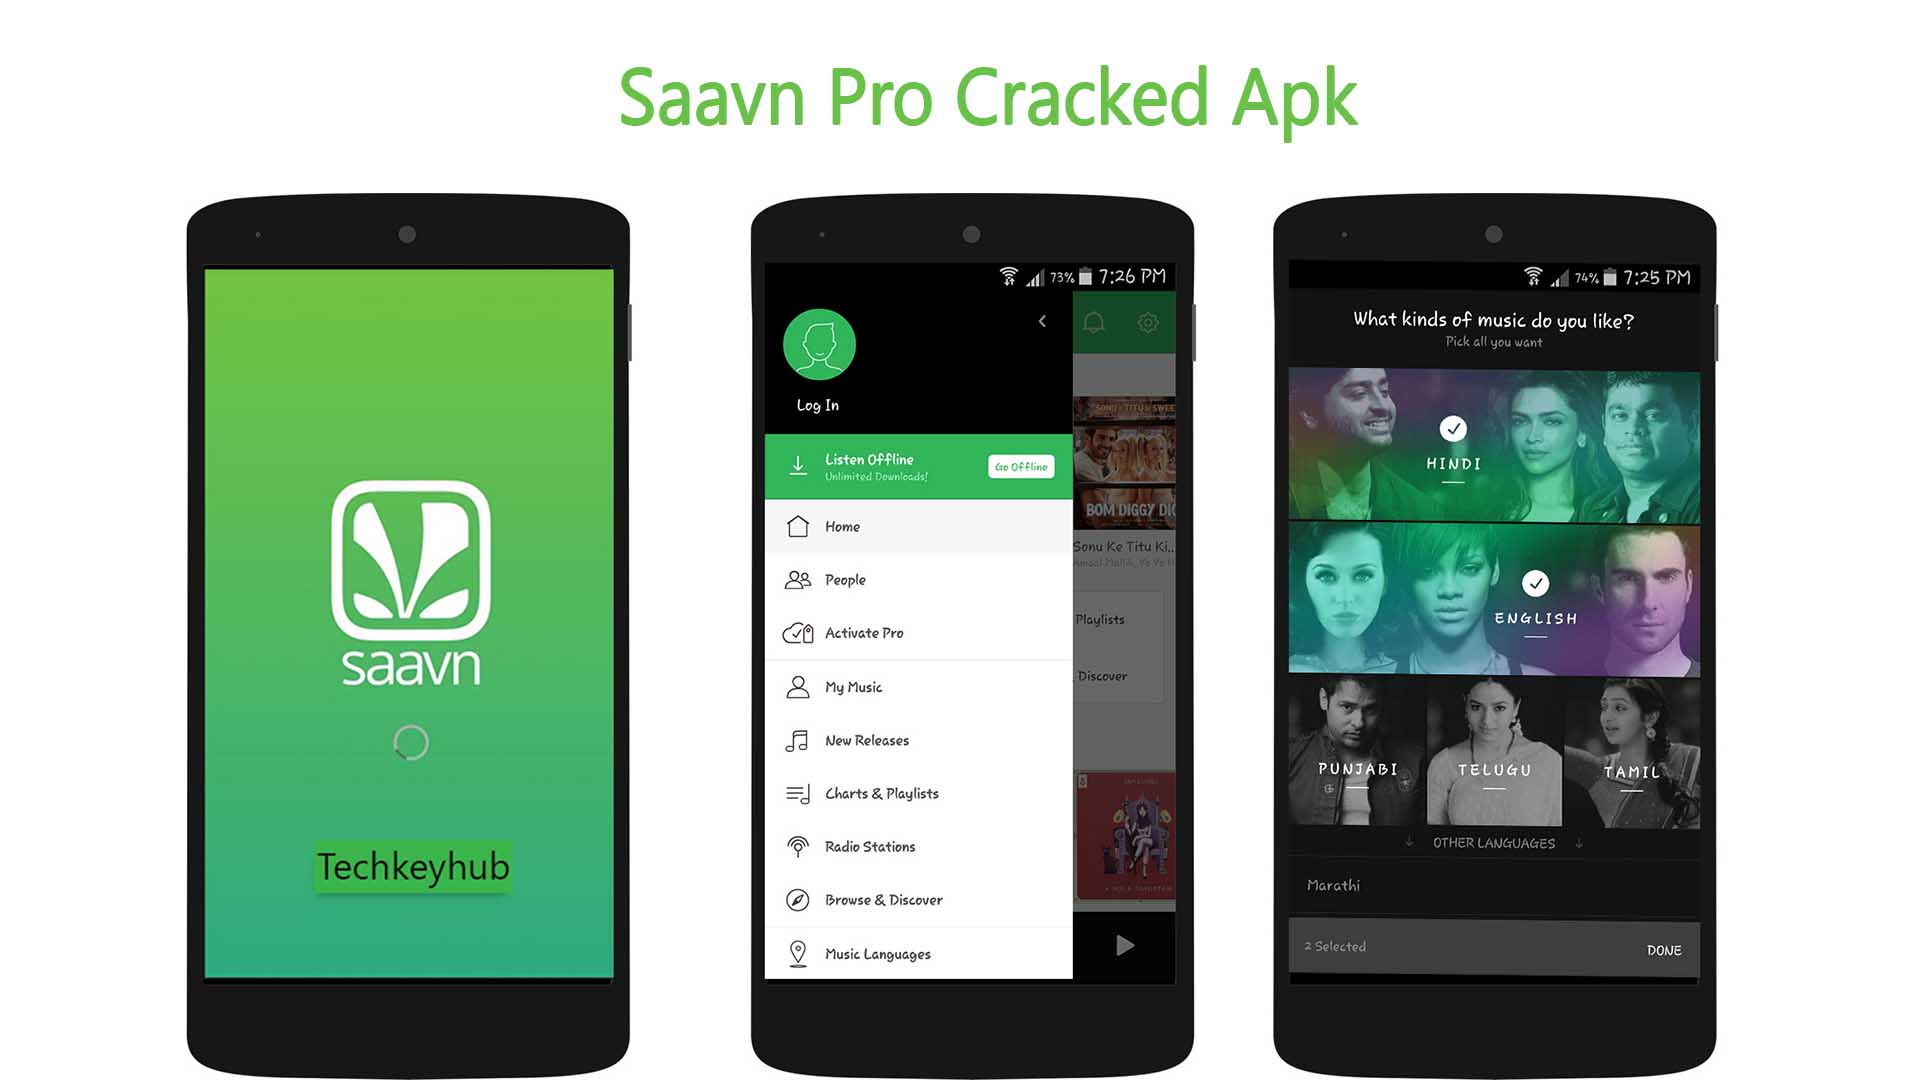 Saavn Pro Cracked Apk Filesl